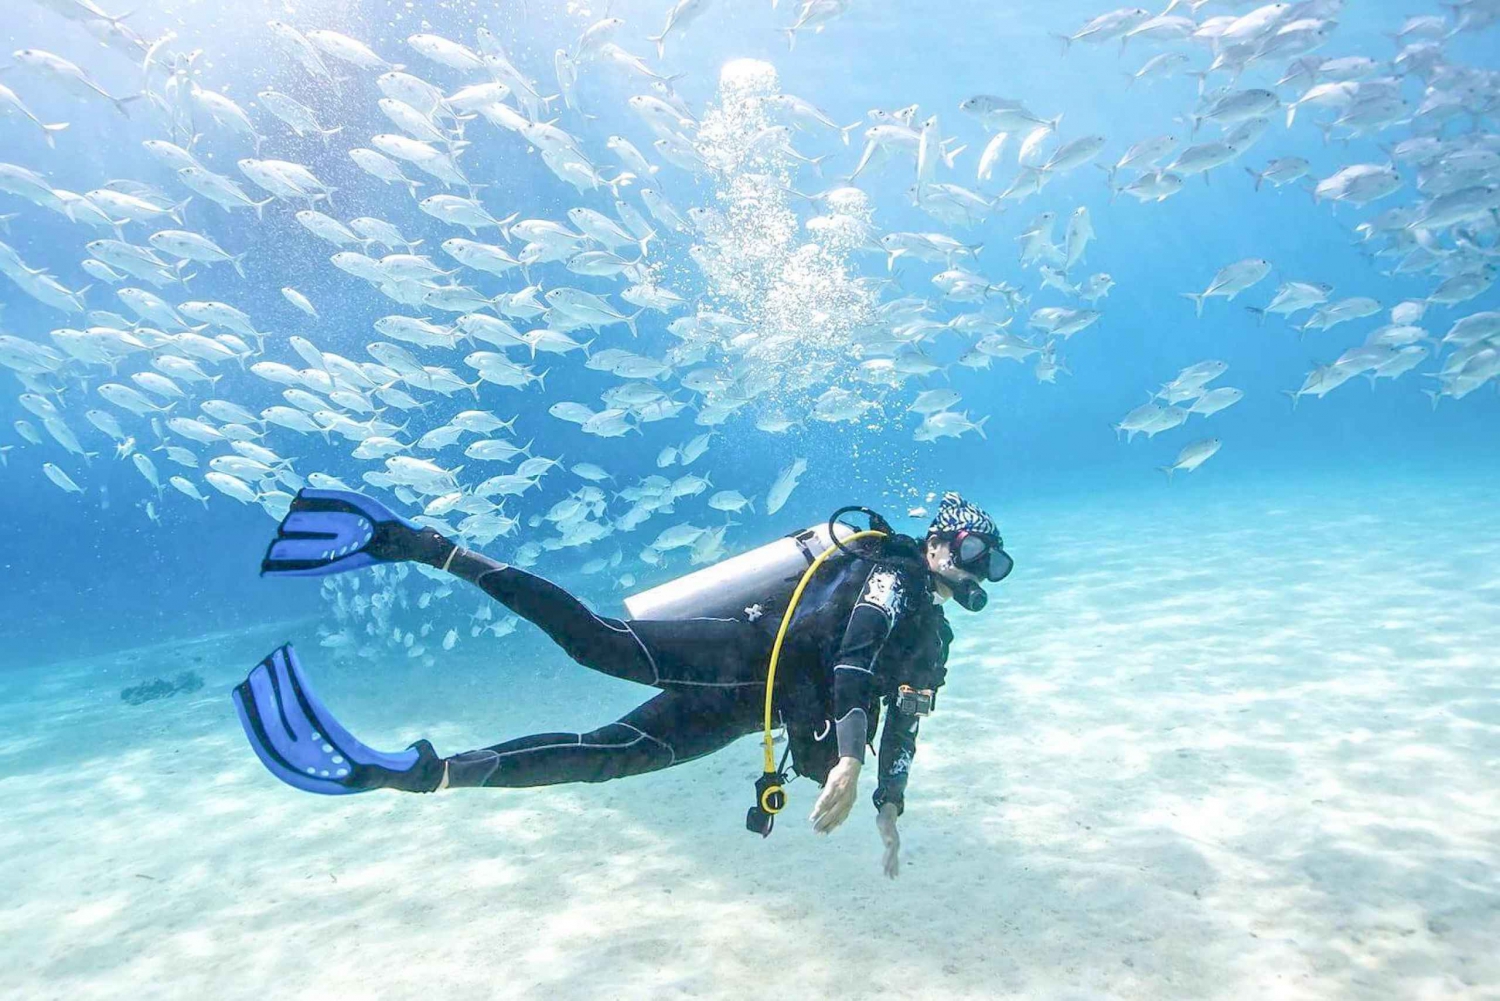 Dubai: PADI Basic Scuba Diving Course